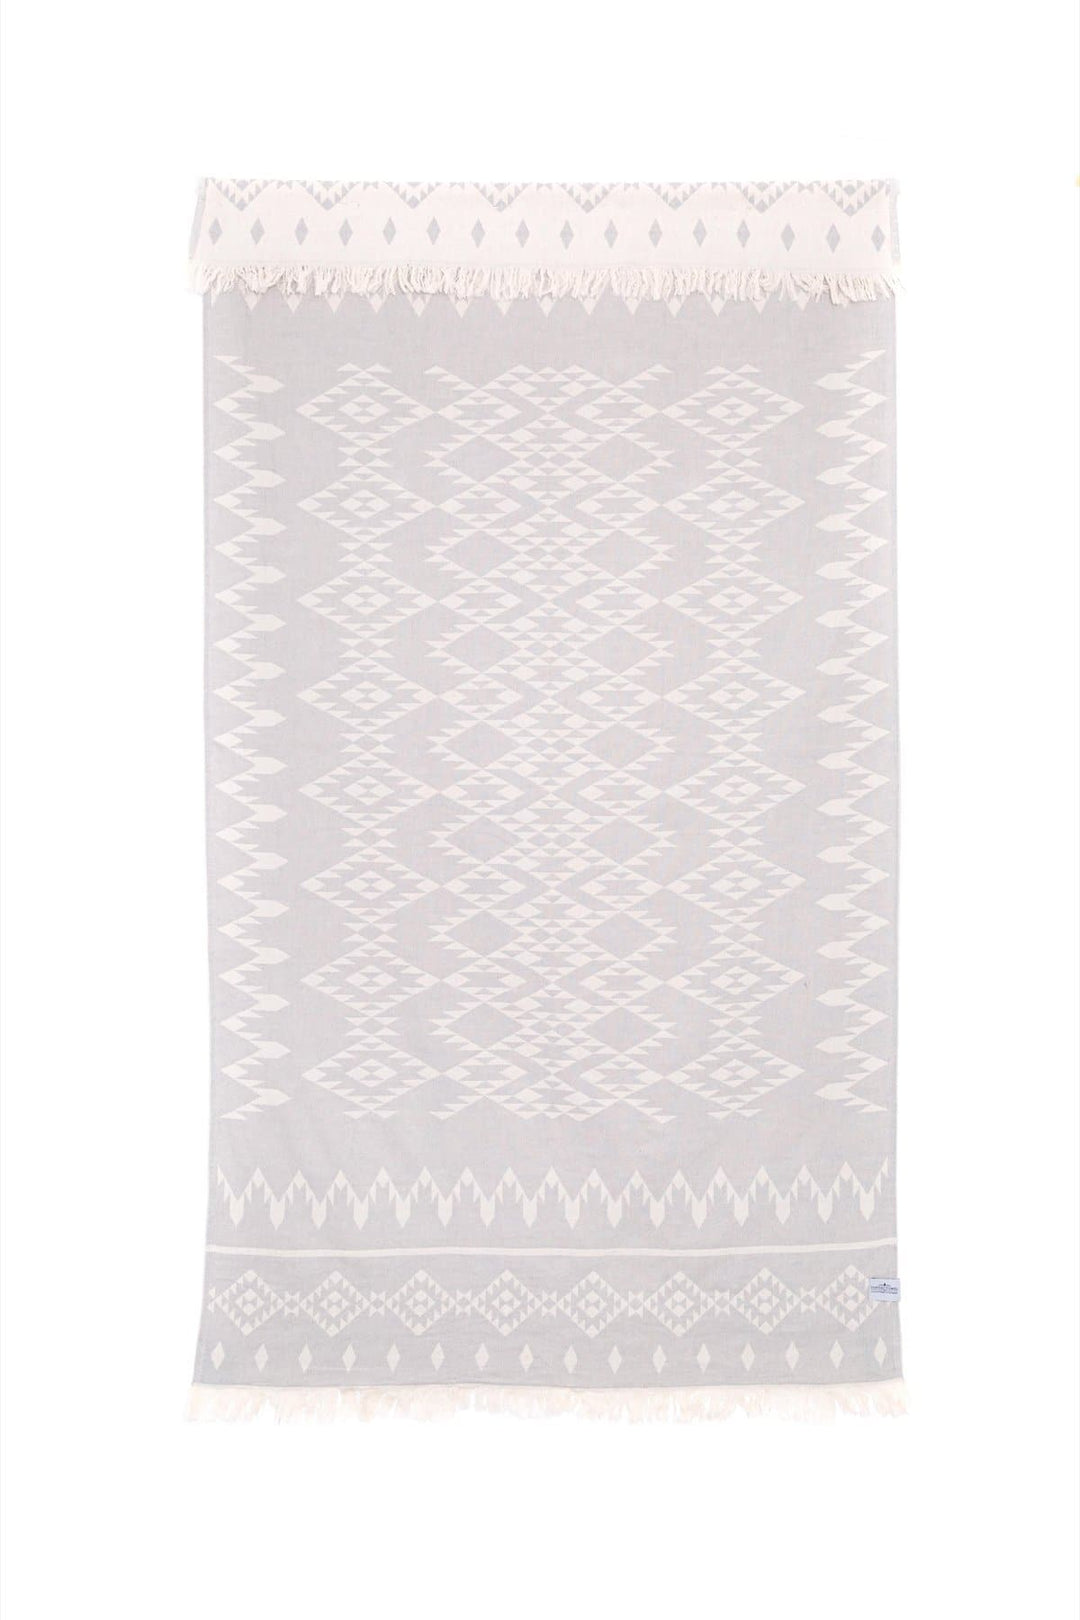 Tofino Towels Towel Pewter Tofino Towels | THE COASTAL TOWEL SERIES